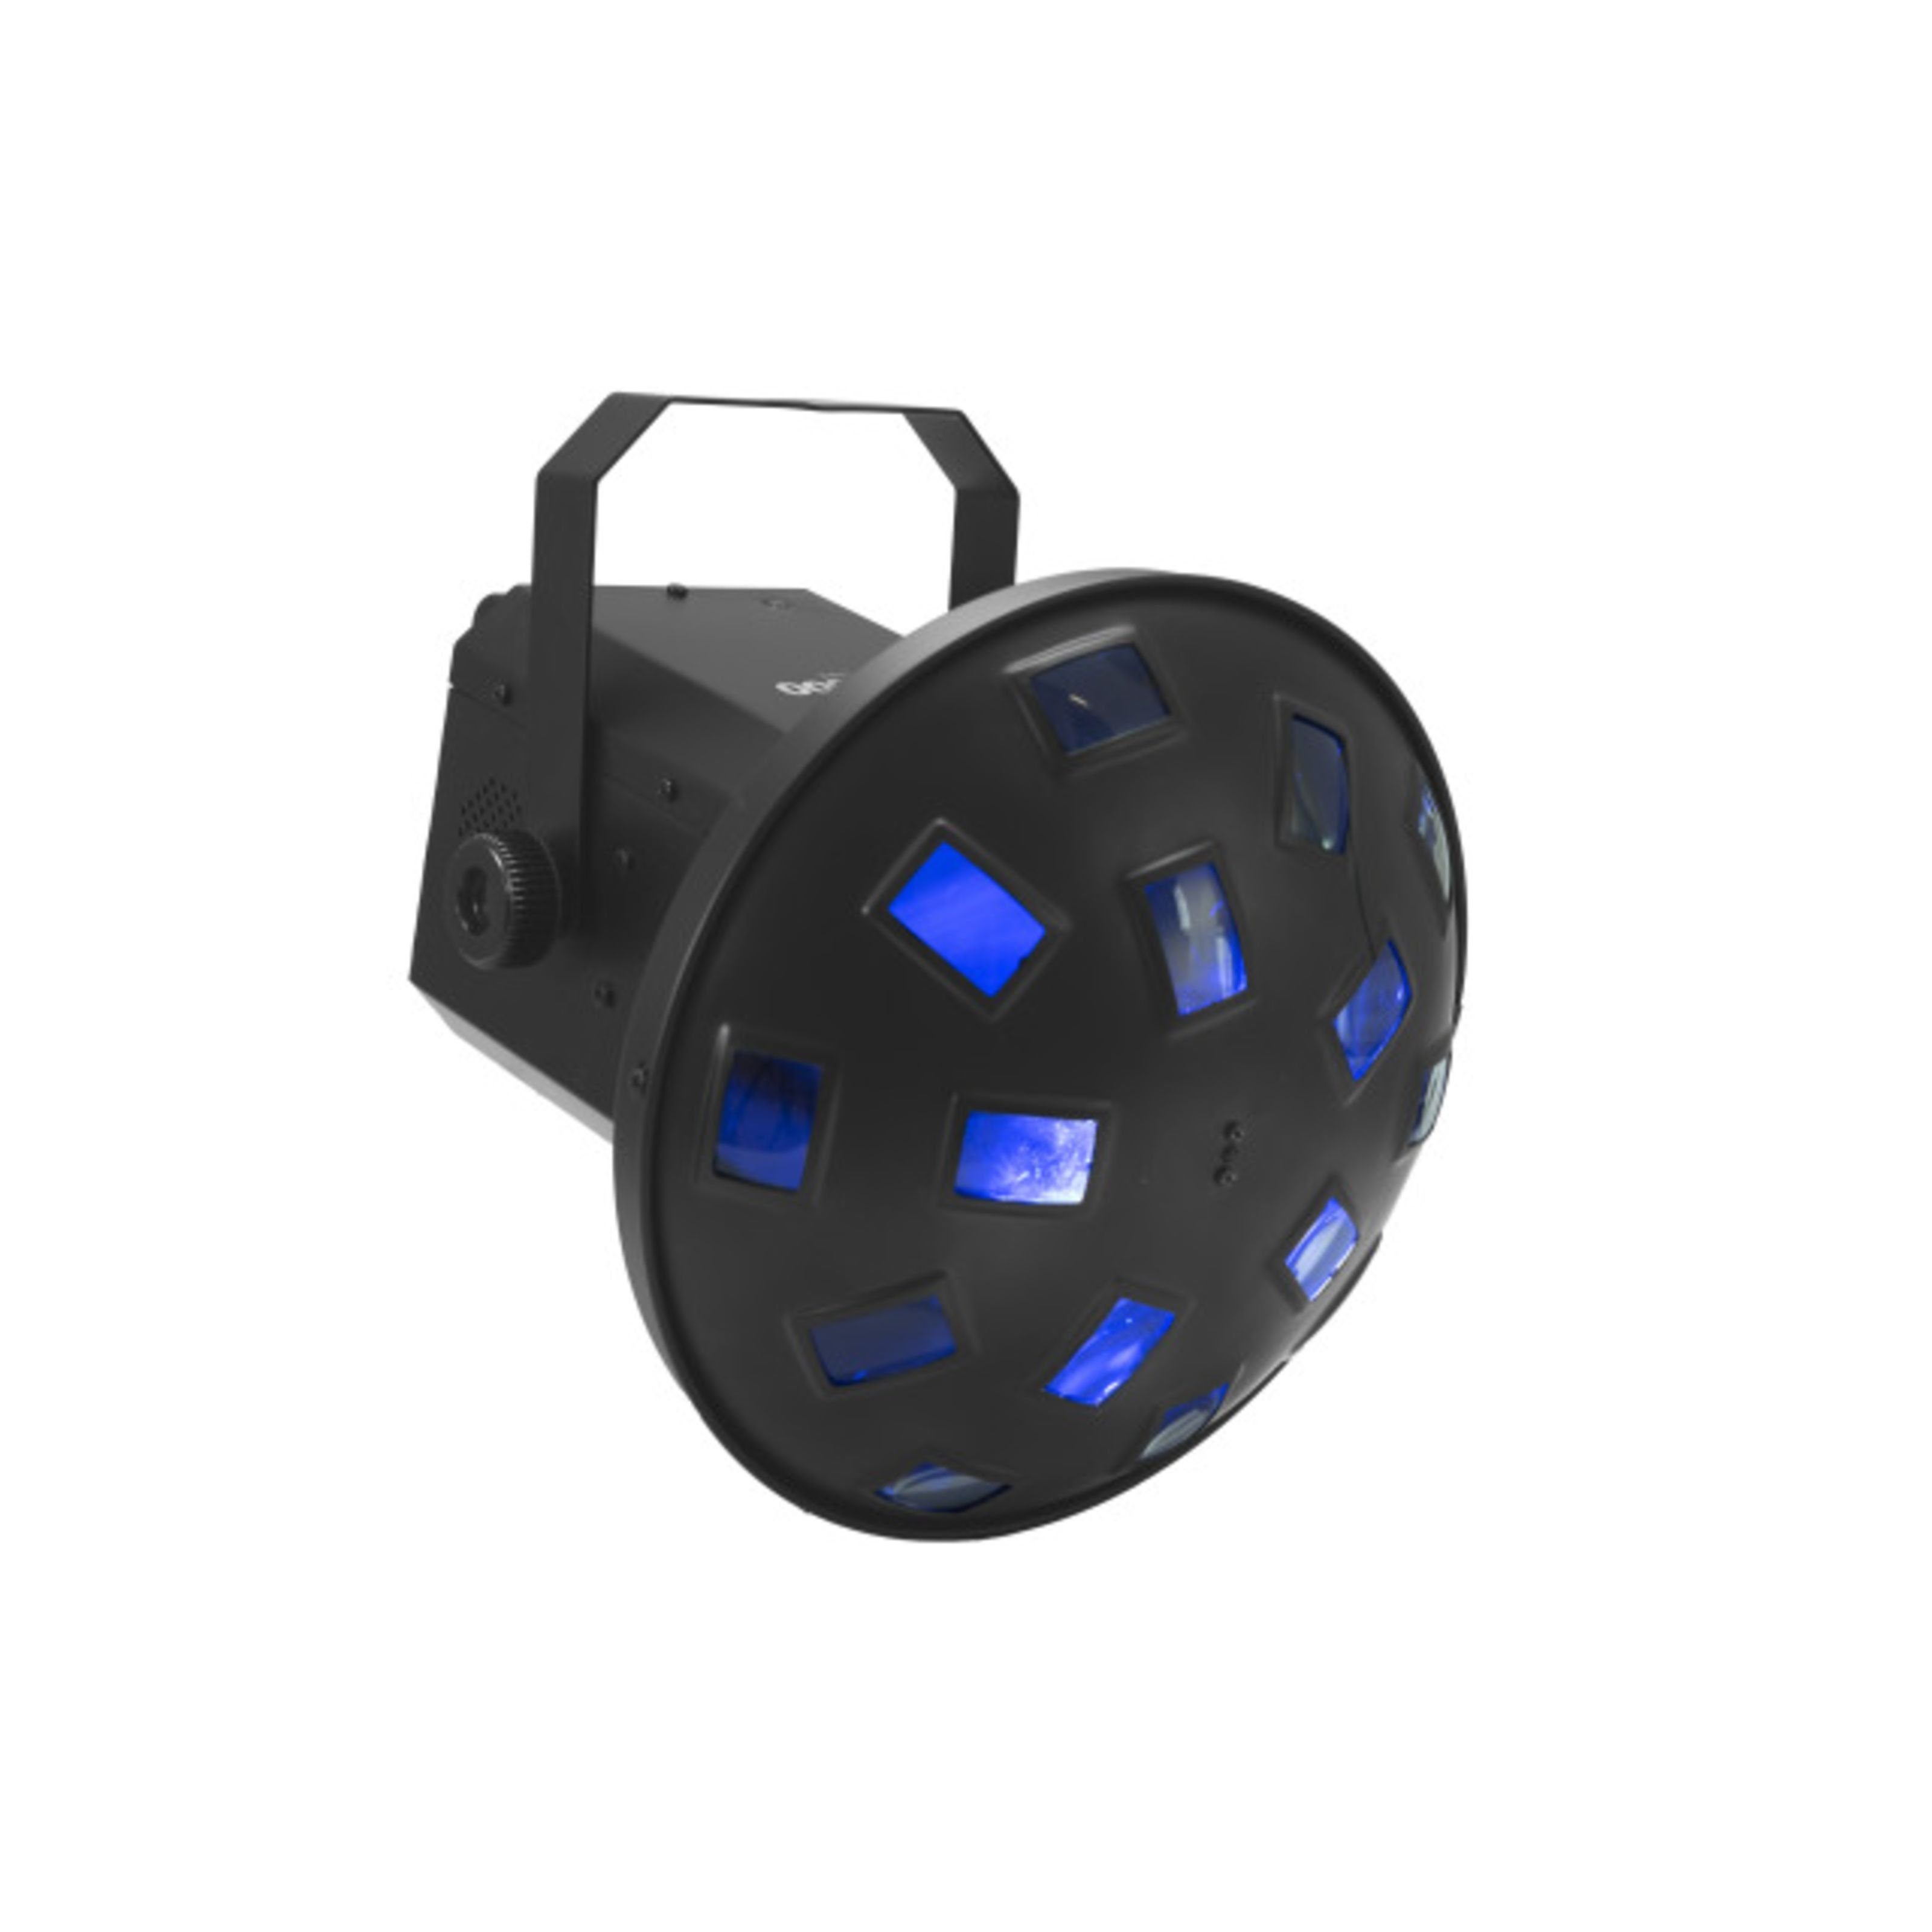 LED LED Showeffekt Discolicht, EUROLITE Strahleneffekt - Z-2000